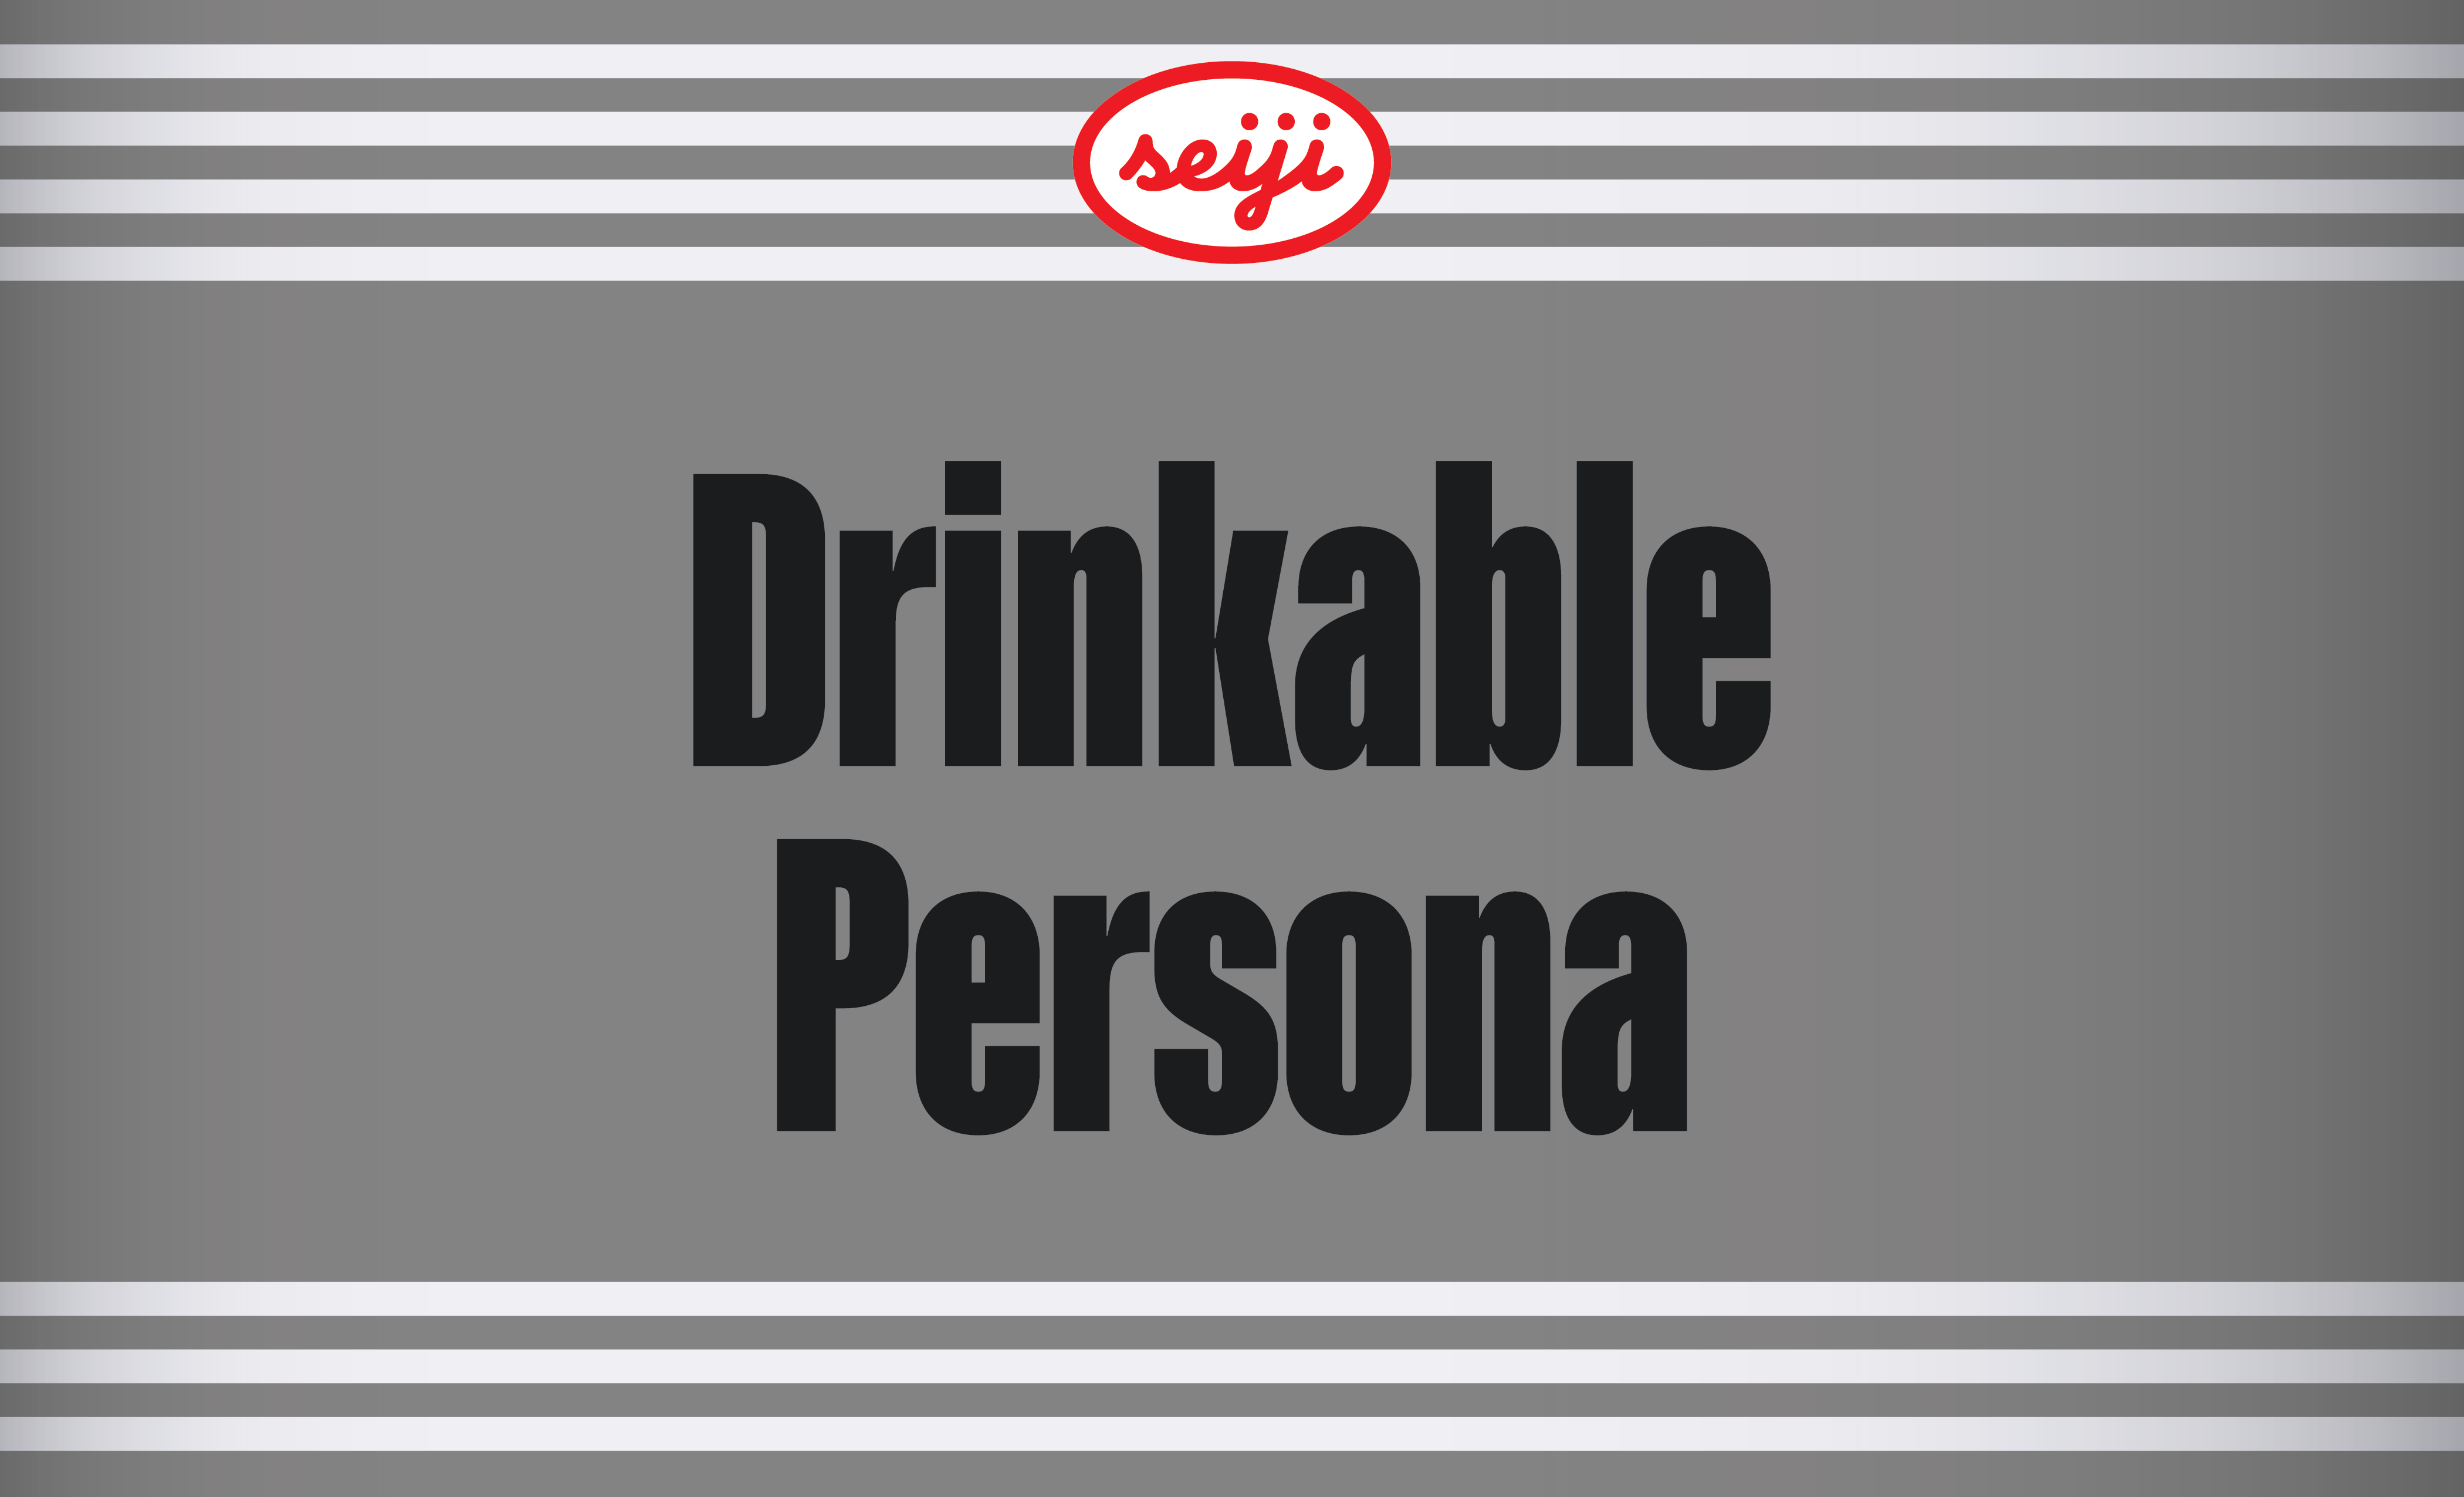 Seiji's Drinkable Persona